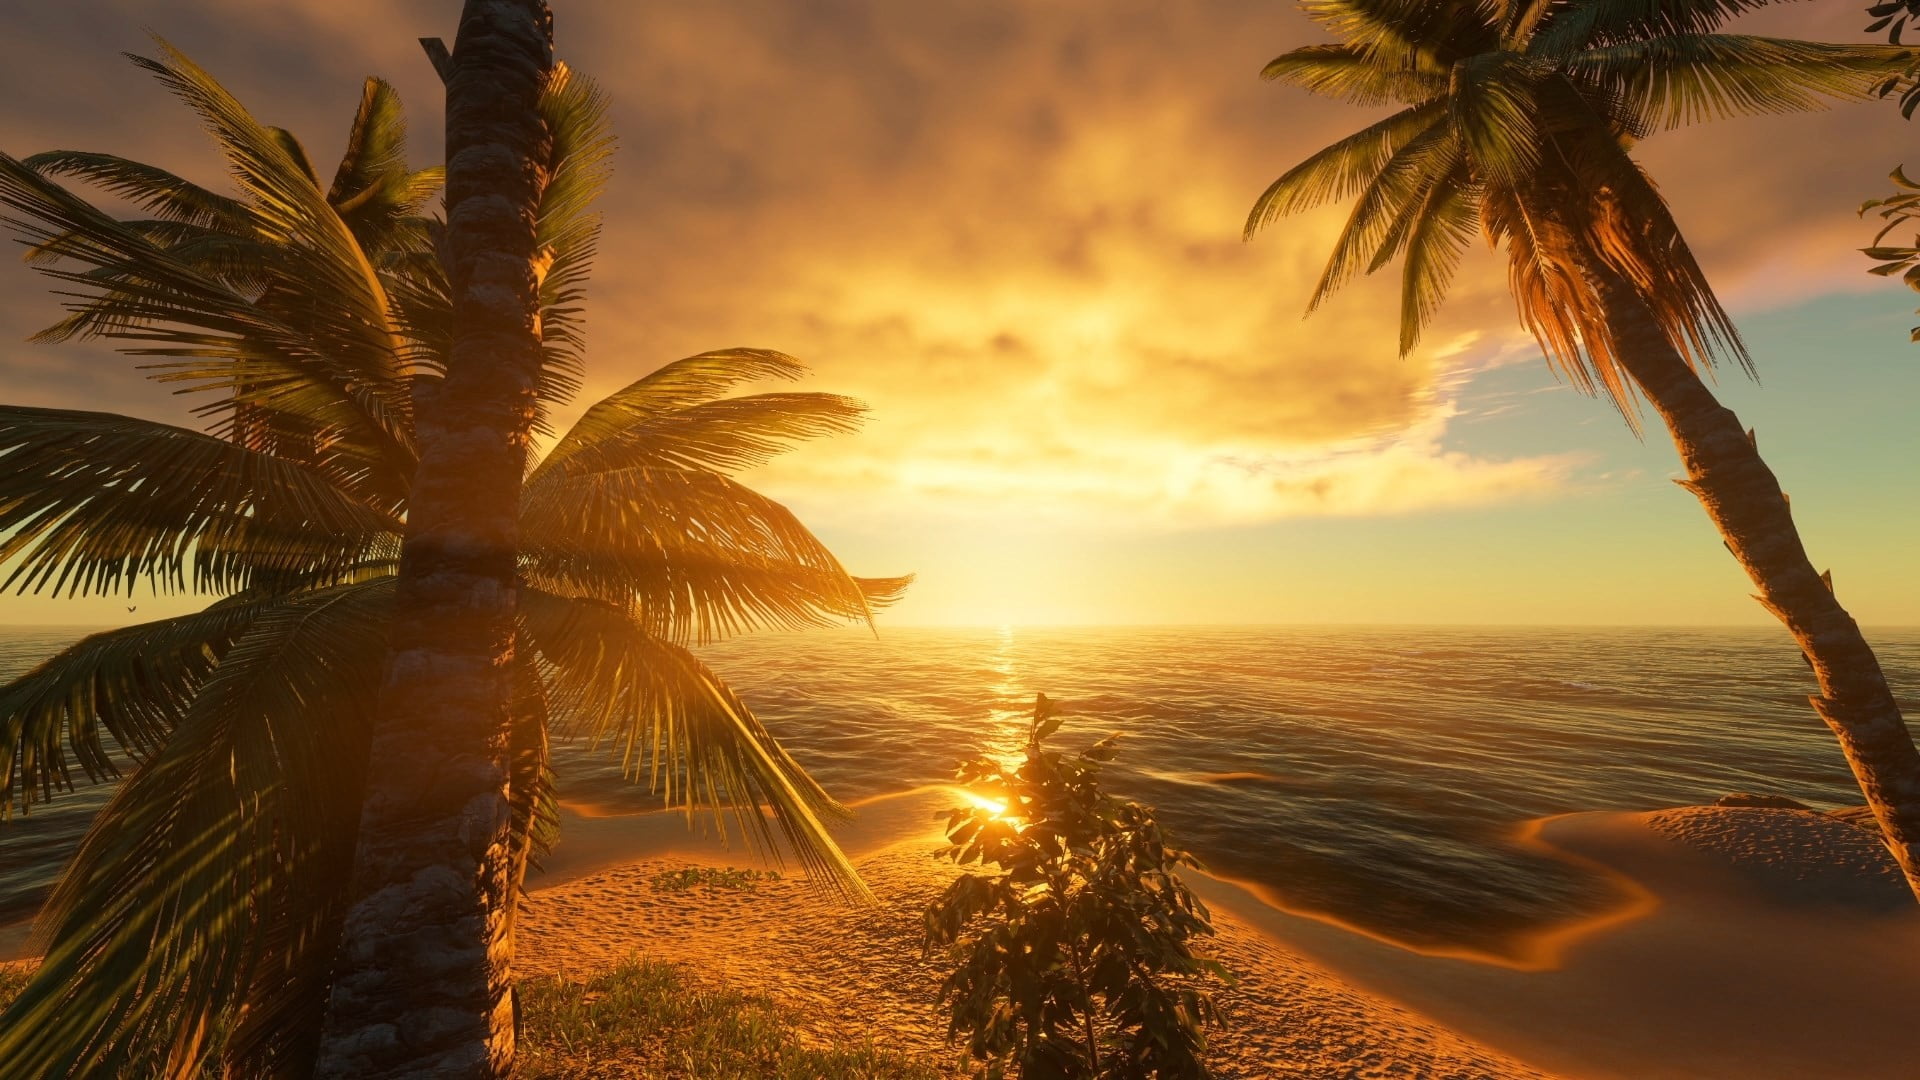 Digital Painting Of Palm Trees Near Beach Landscape Sunset